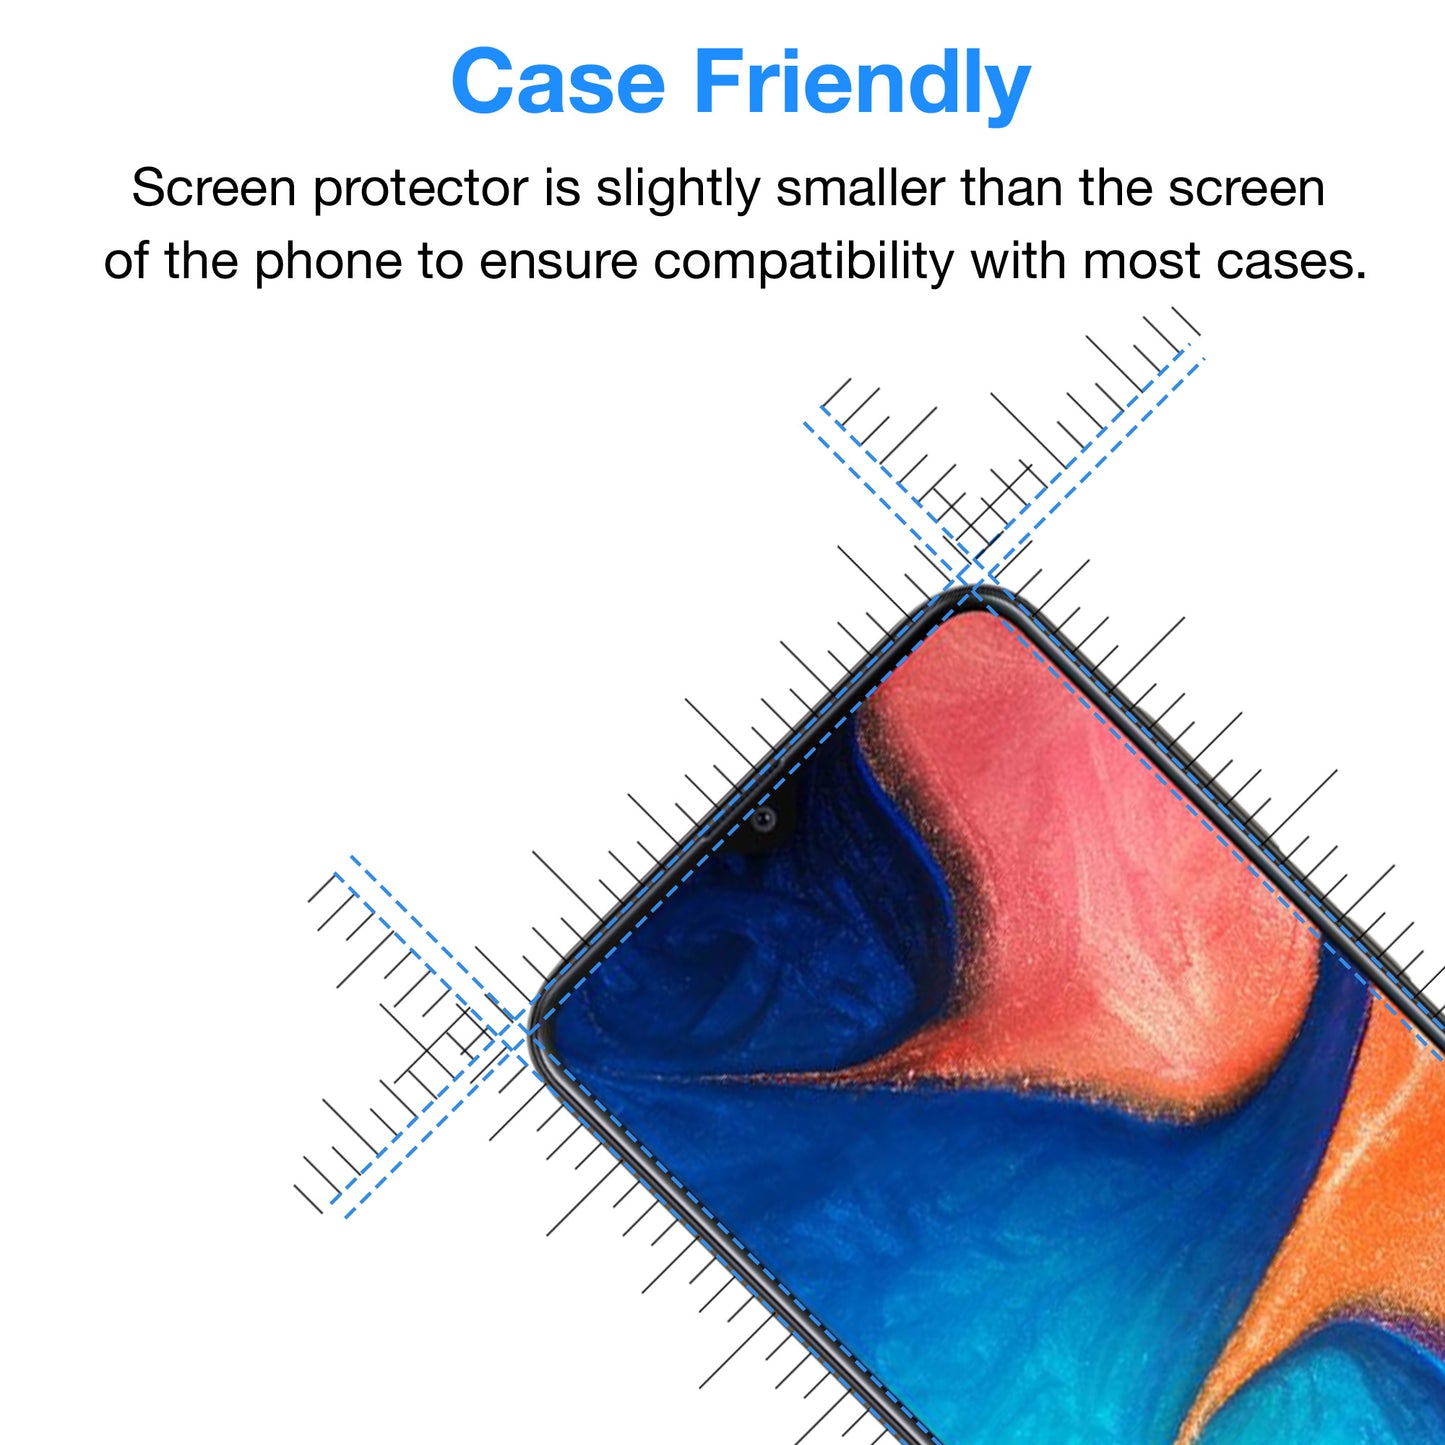 [3 Pack] MEZON Samsung Galaxy A30 Anti-Glare Matte Screen Protector Case Friendly Film (A30, Matte)